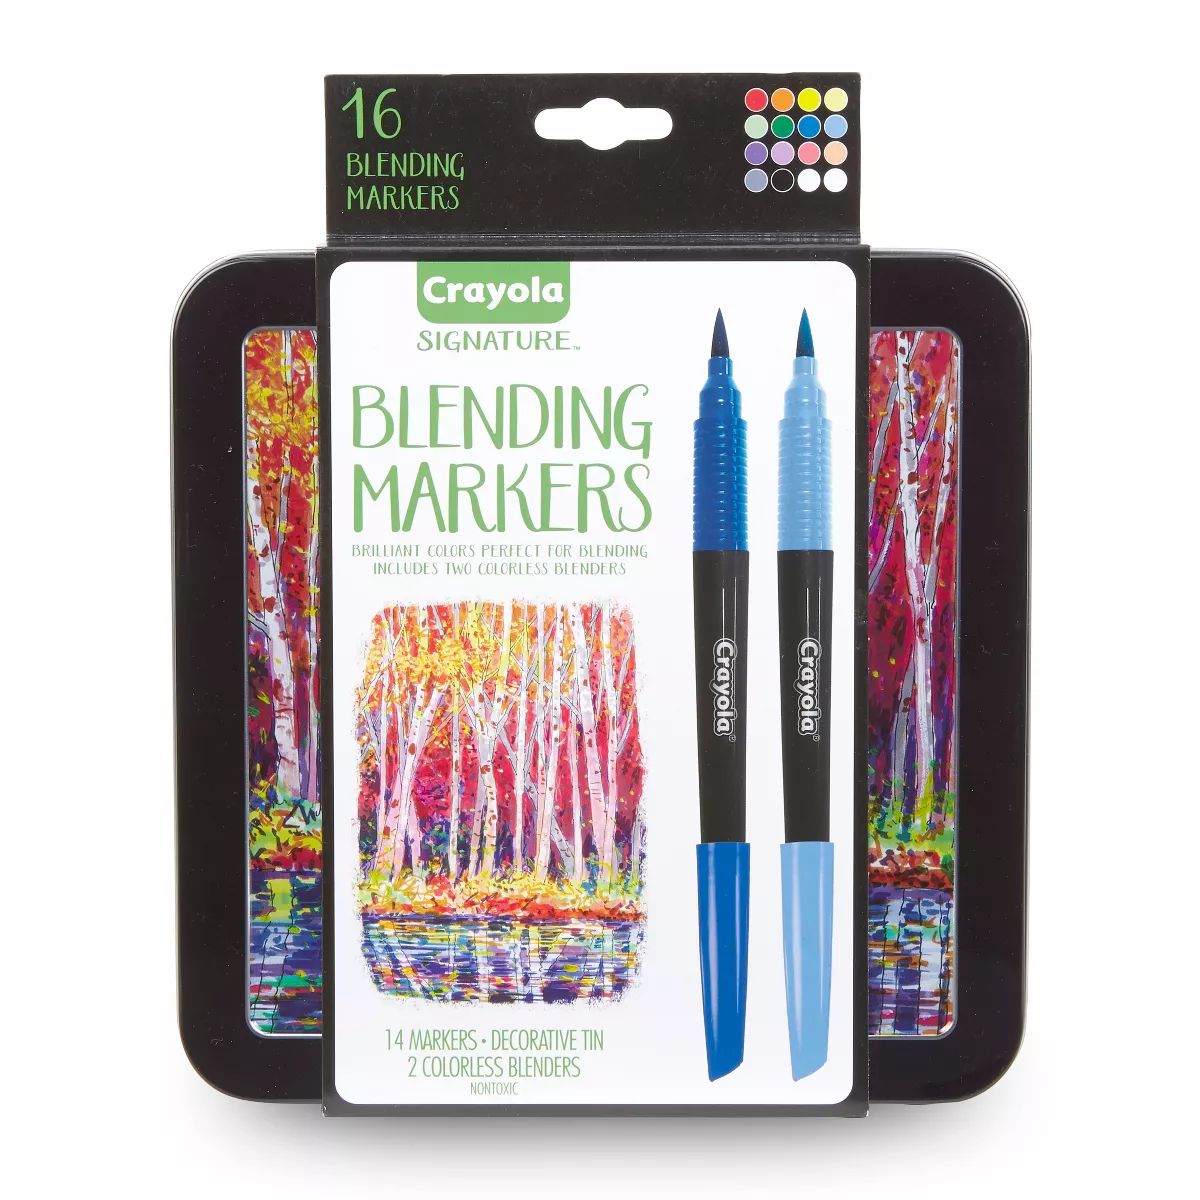 Crayola 16ct Blending Marker Kit with Case | Target